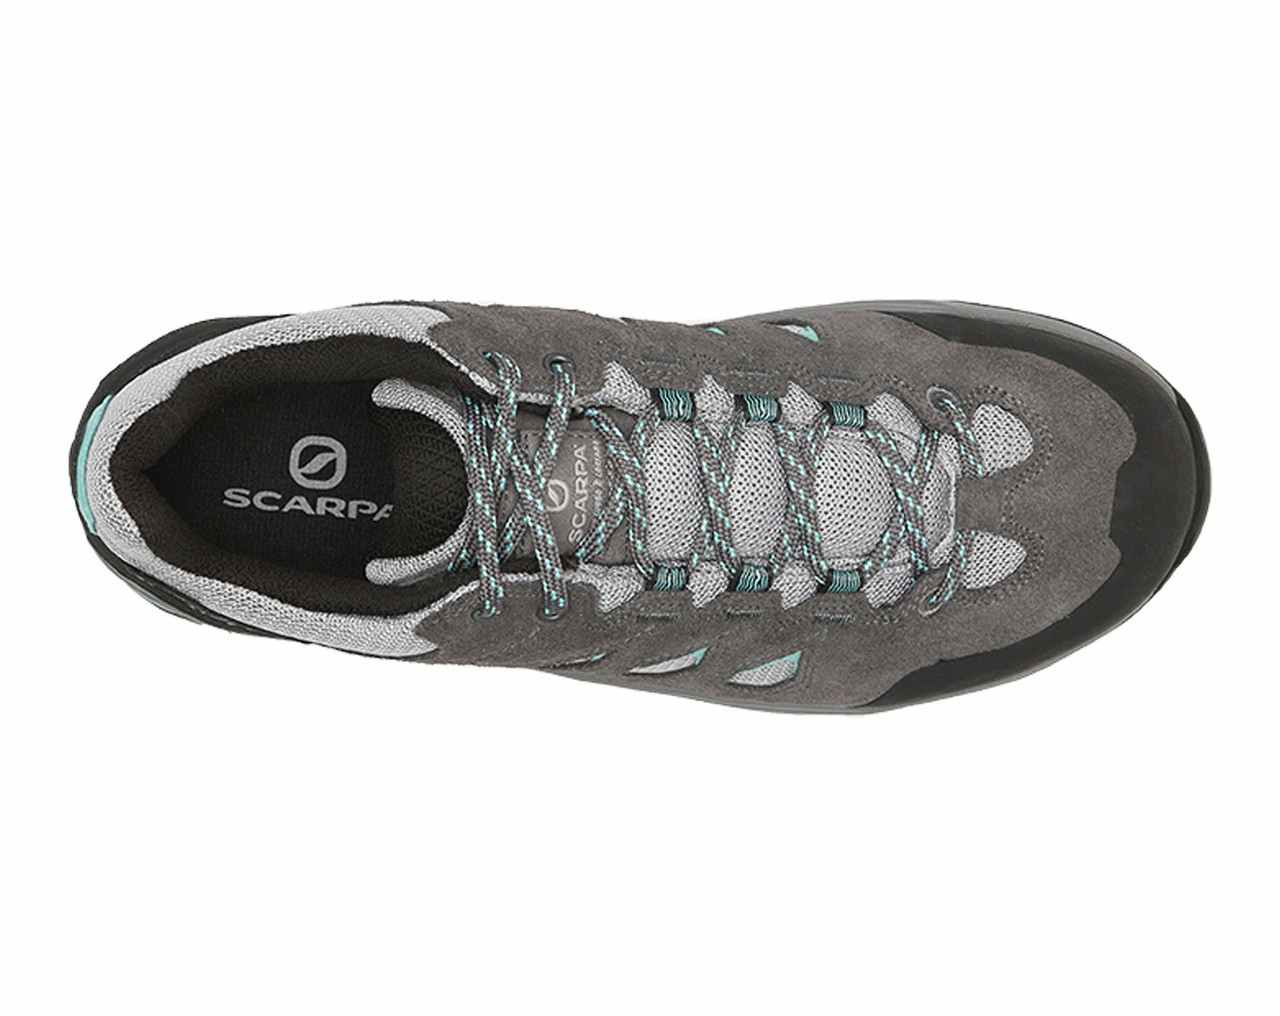 Moraine Gore-Tex Light Trail Shoes Mid Grey/Lagoon